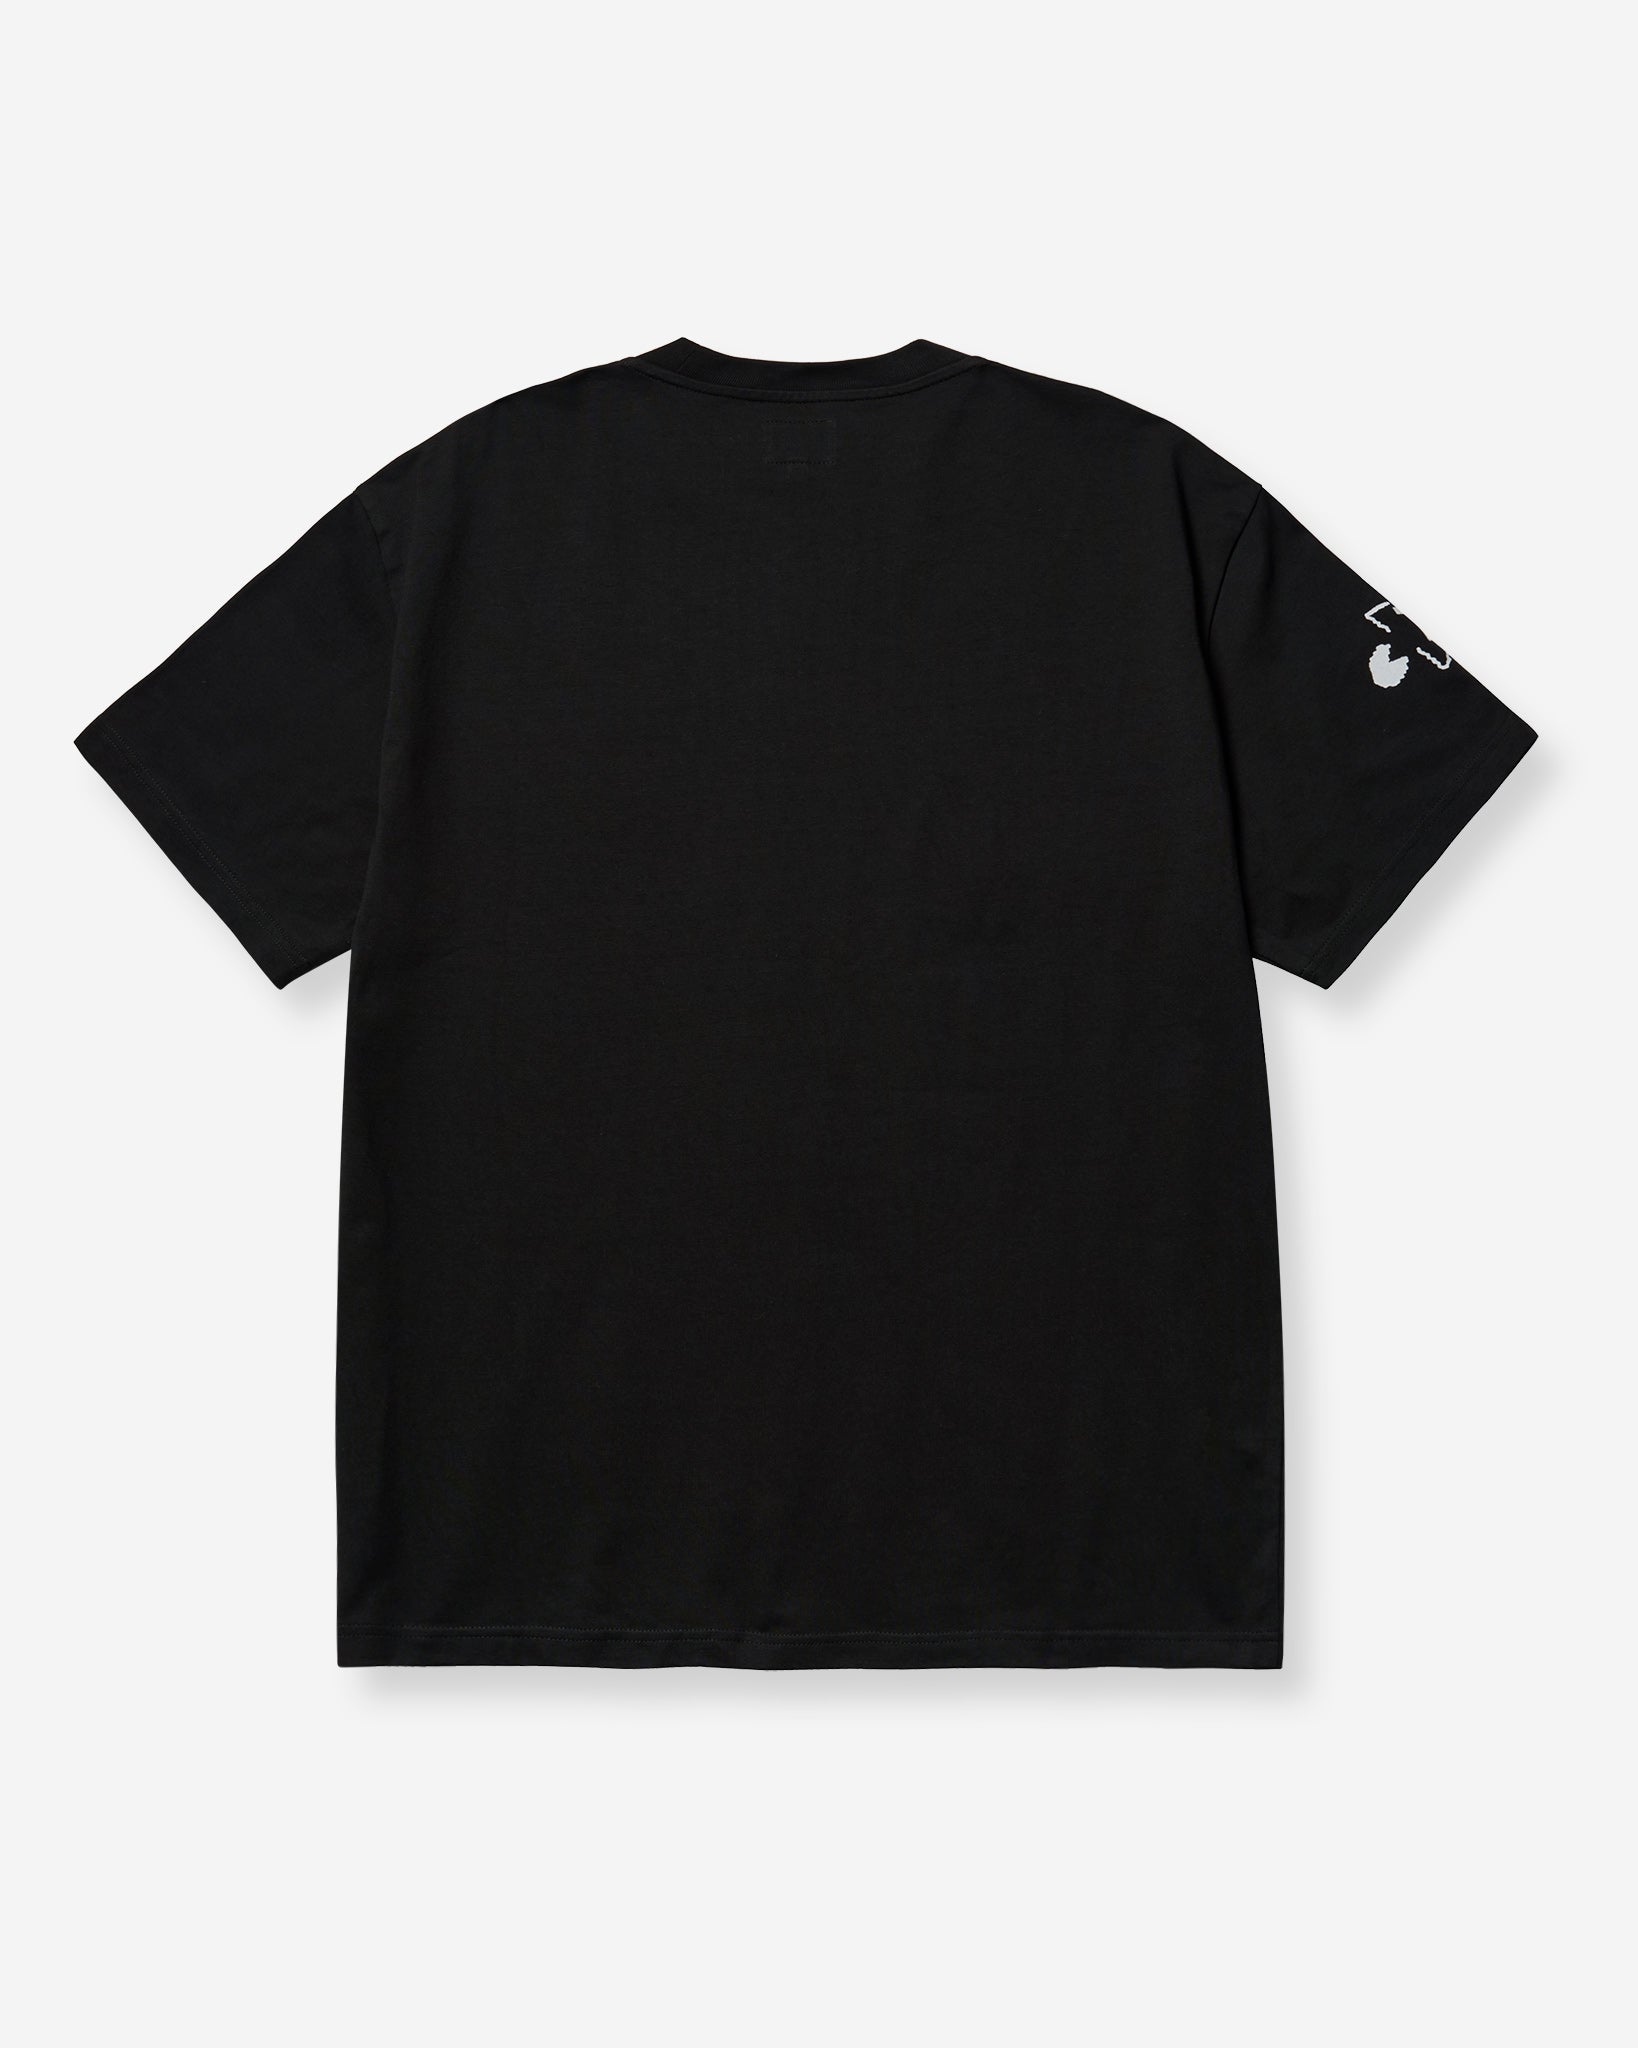 Spectrum Block Filter T-Shirt - Black